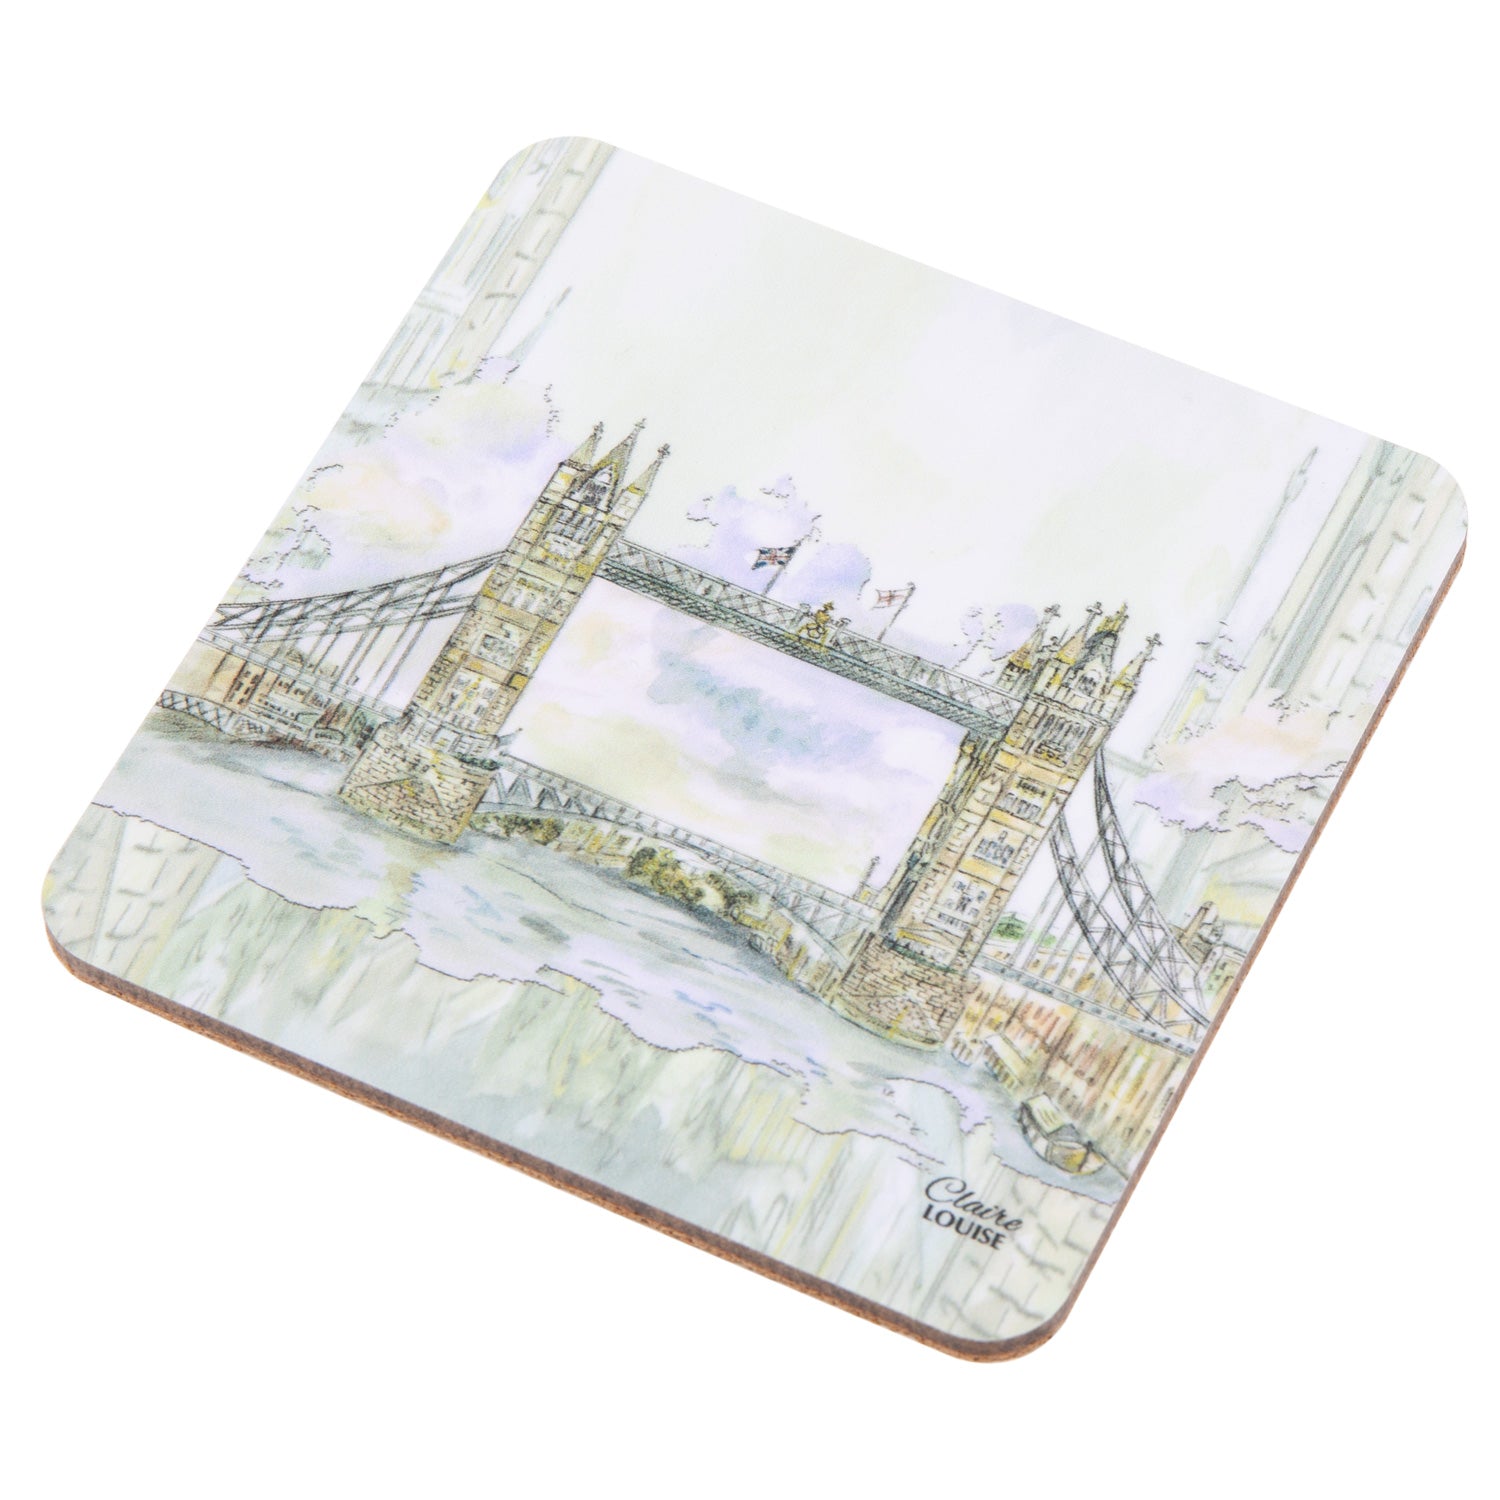 Claire Louise Tower Bridge Coaster 2